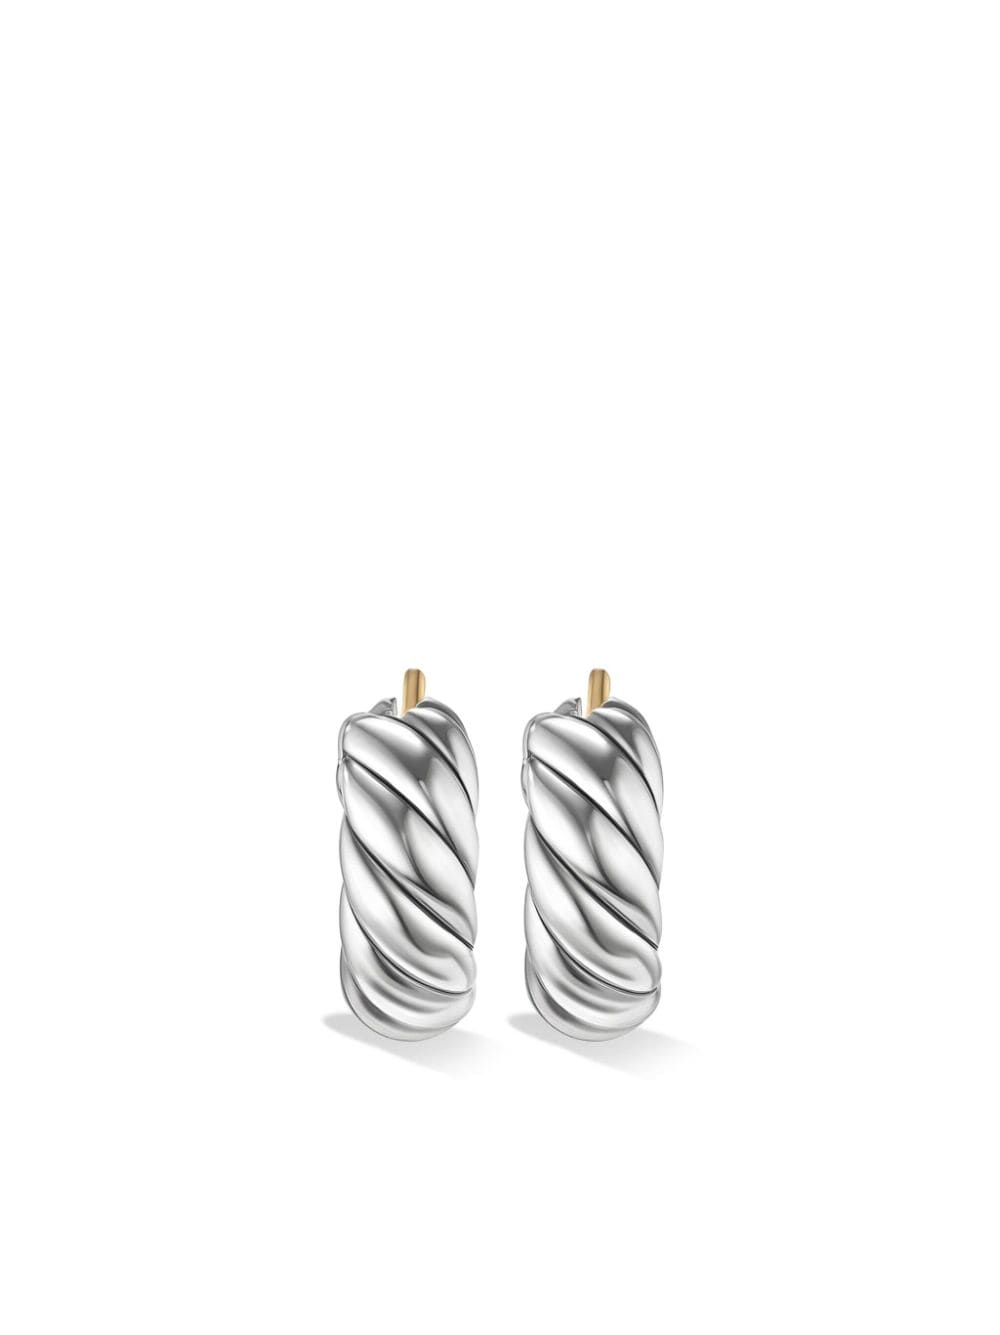 David Yurman sterling silver Sculpted Cable hoop earrings von David Yurman